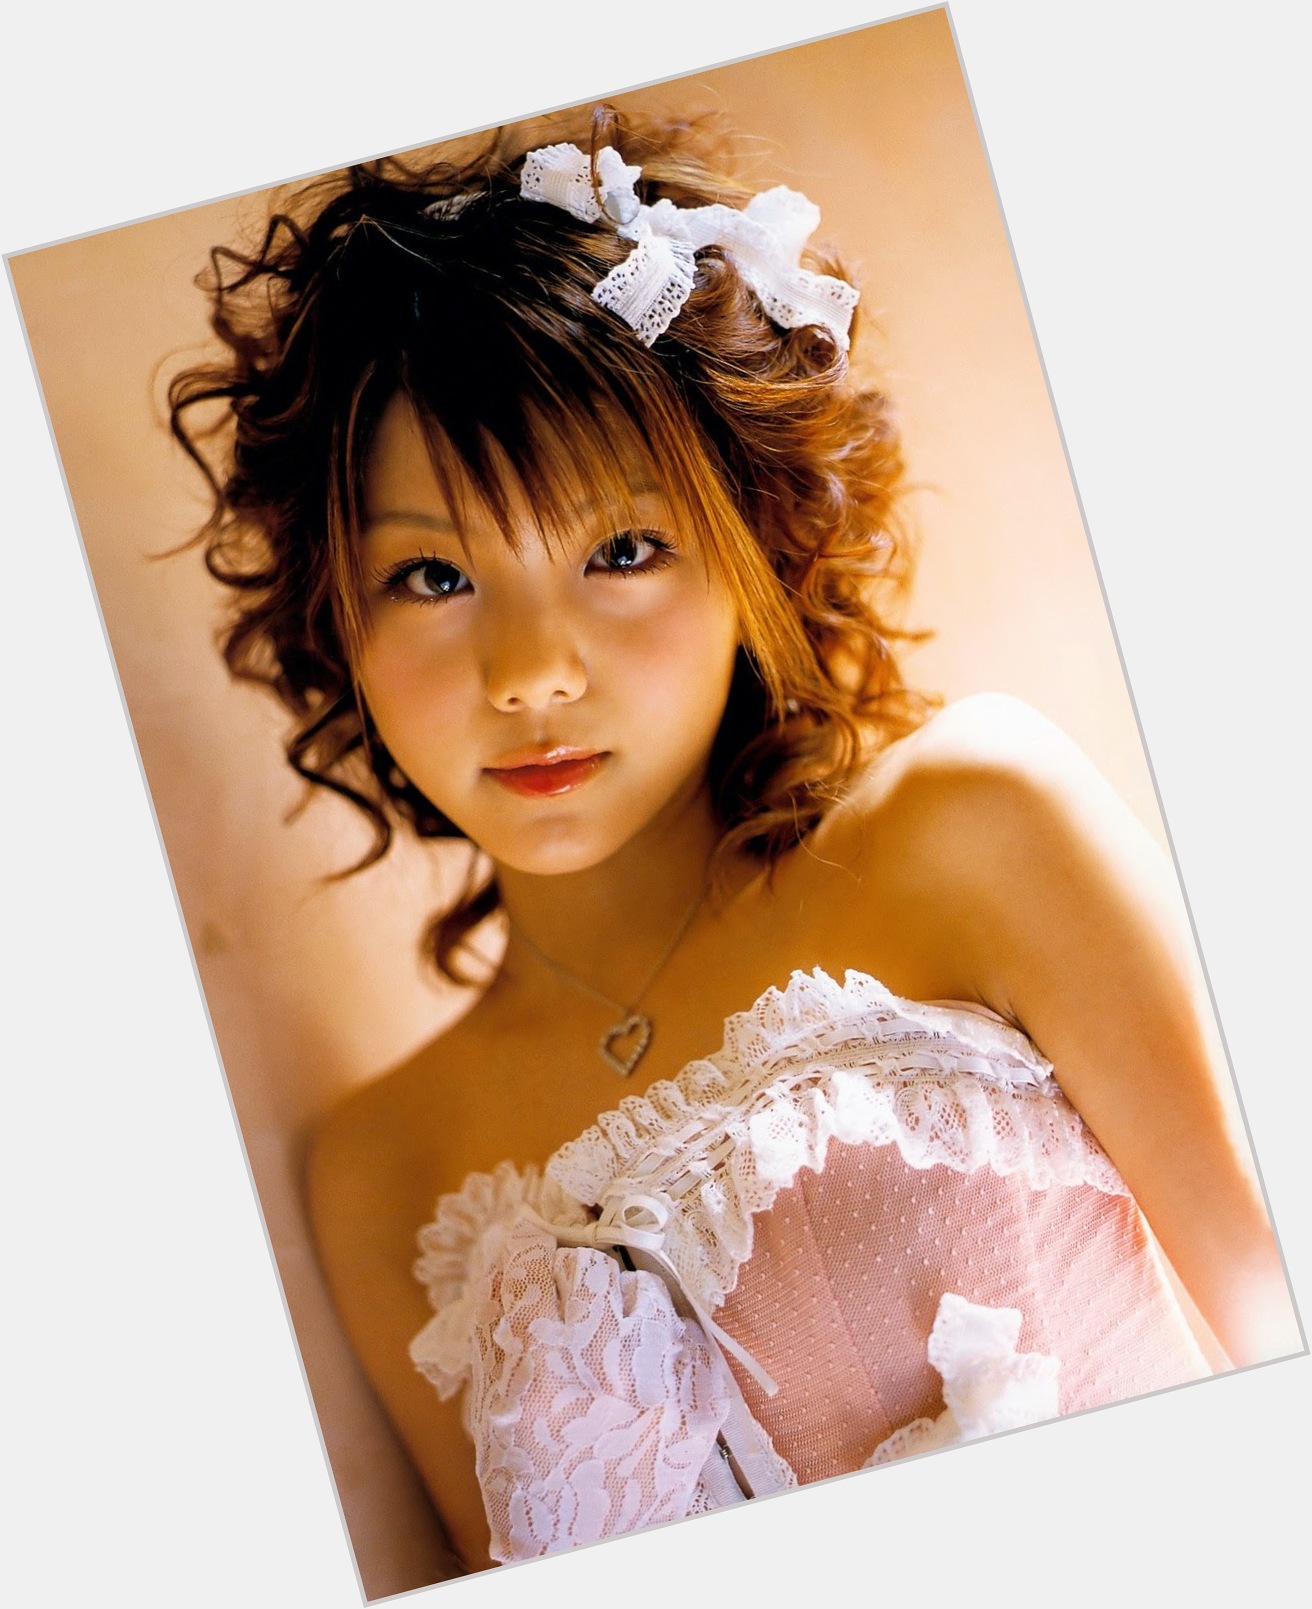 <a href="/hot-women/reina-tanaka/where-dating-news-photos">Reina Tanaka</a>  